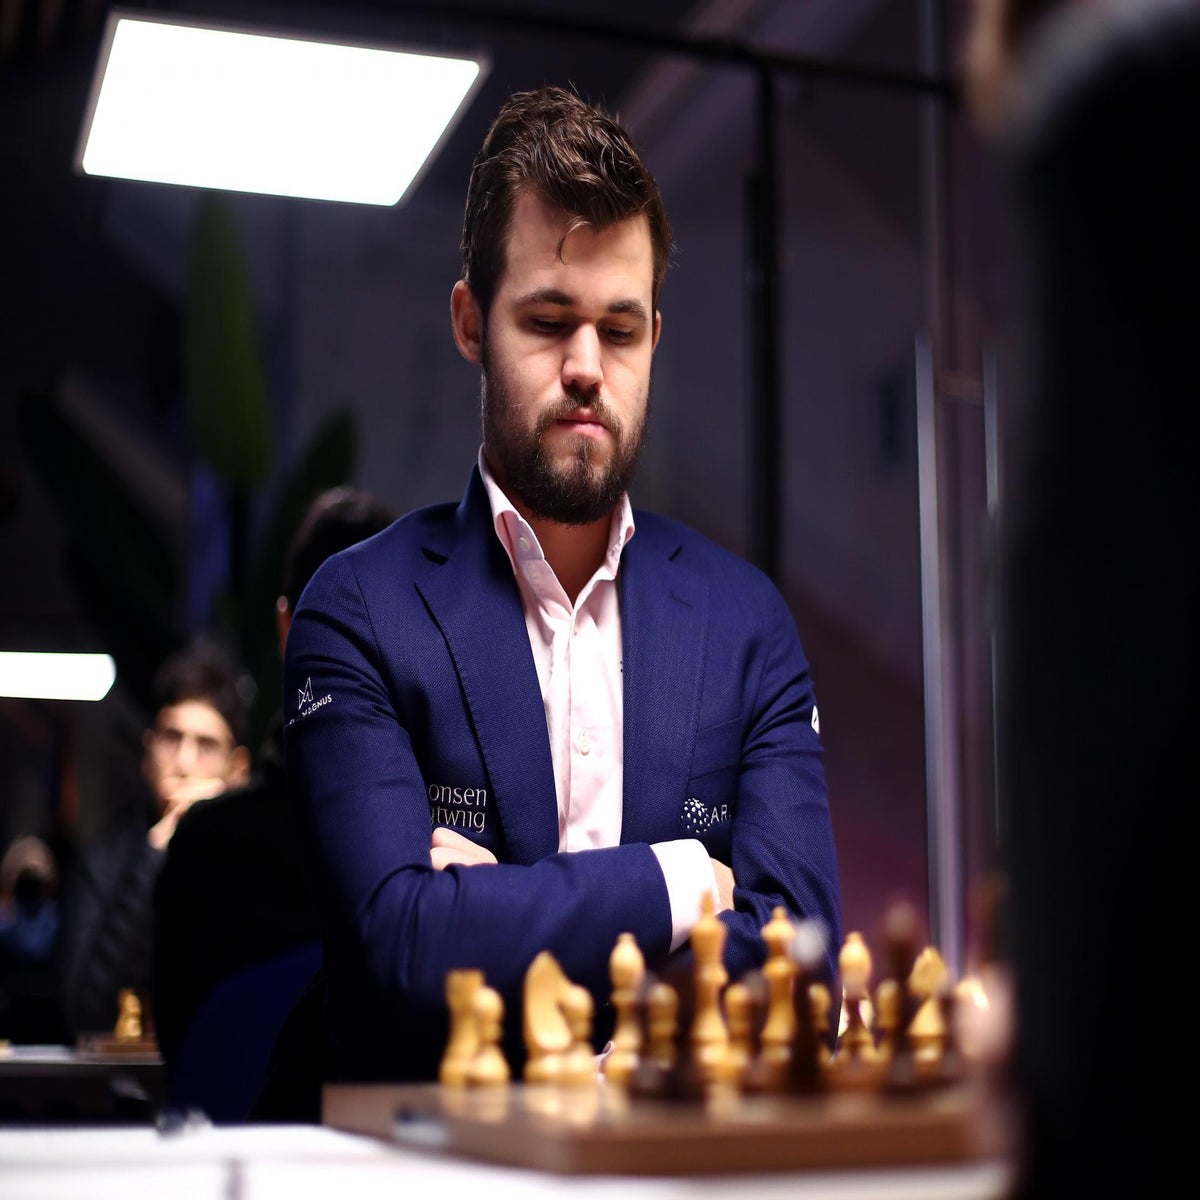 How Magnus Carlsen is pioneering chess's online revolution